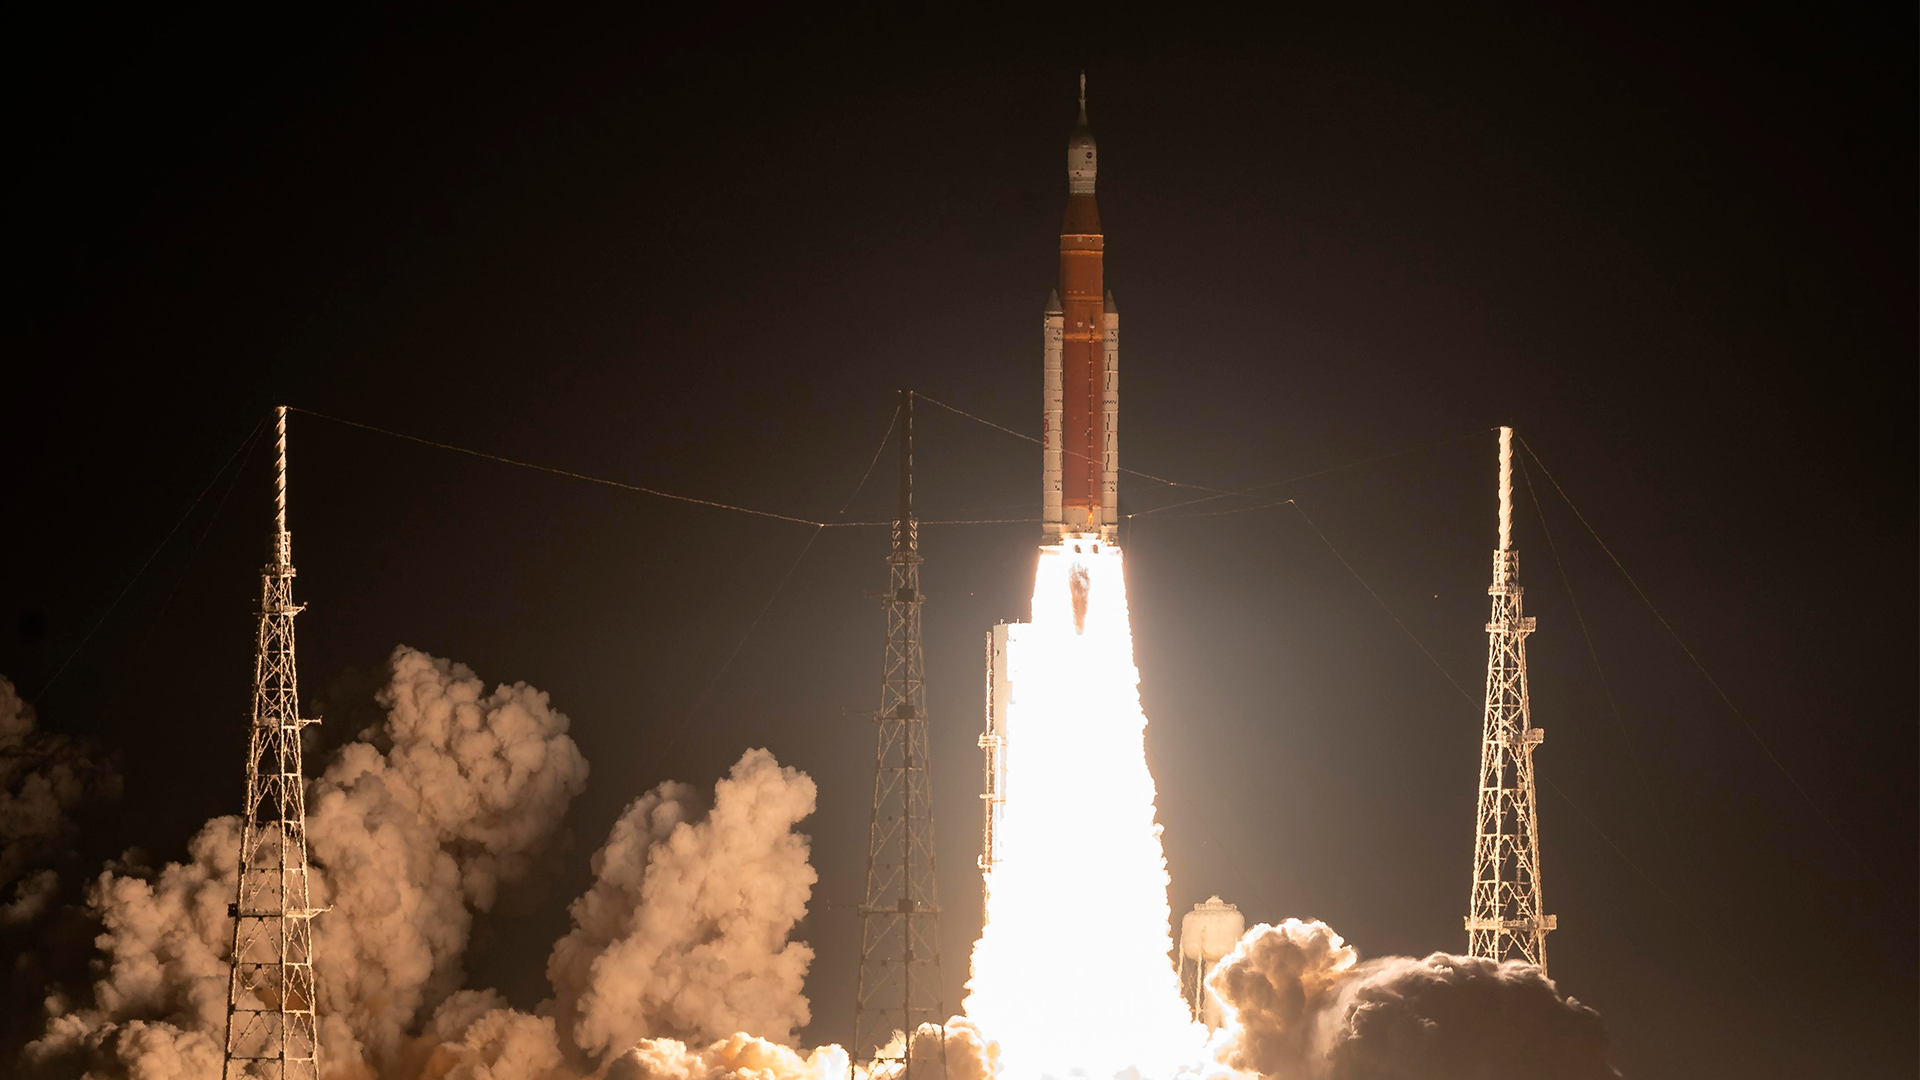 NASA's Artemis mission take humans to the Moon | ARQUIMEA